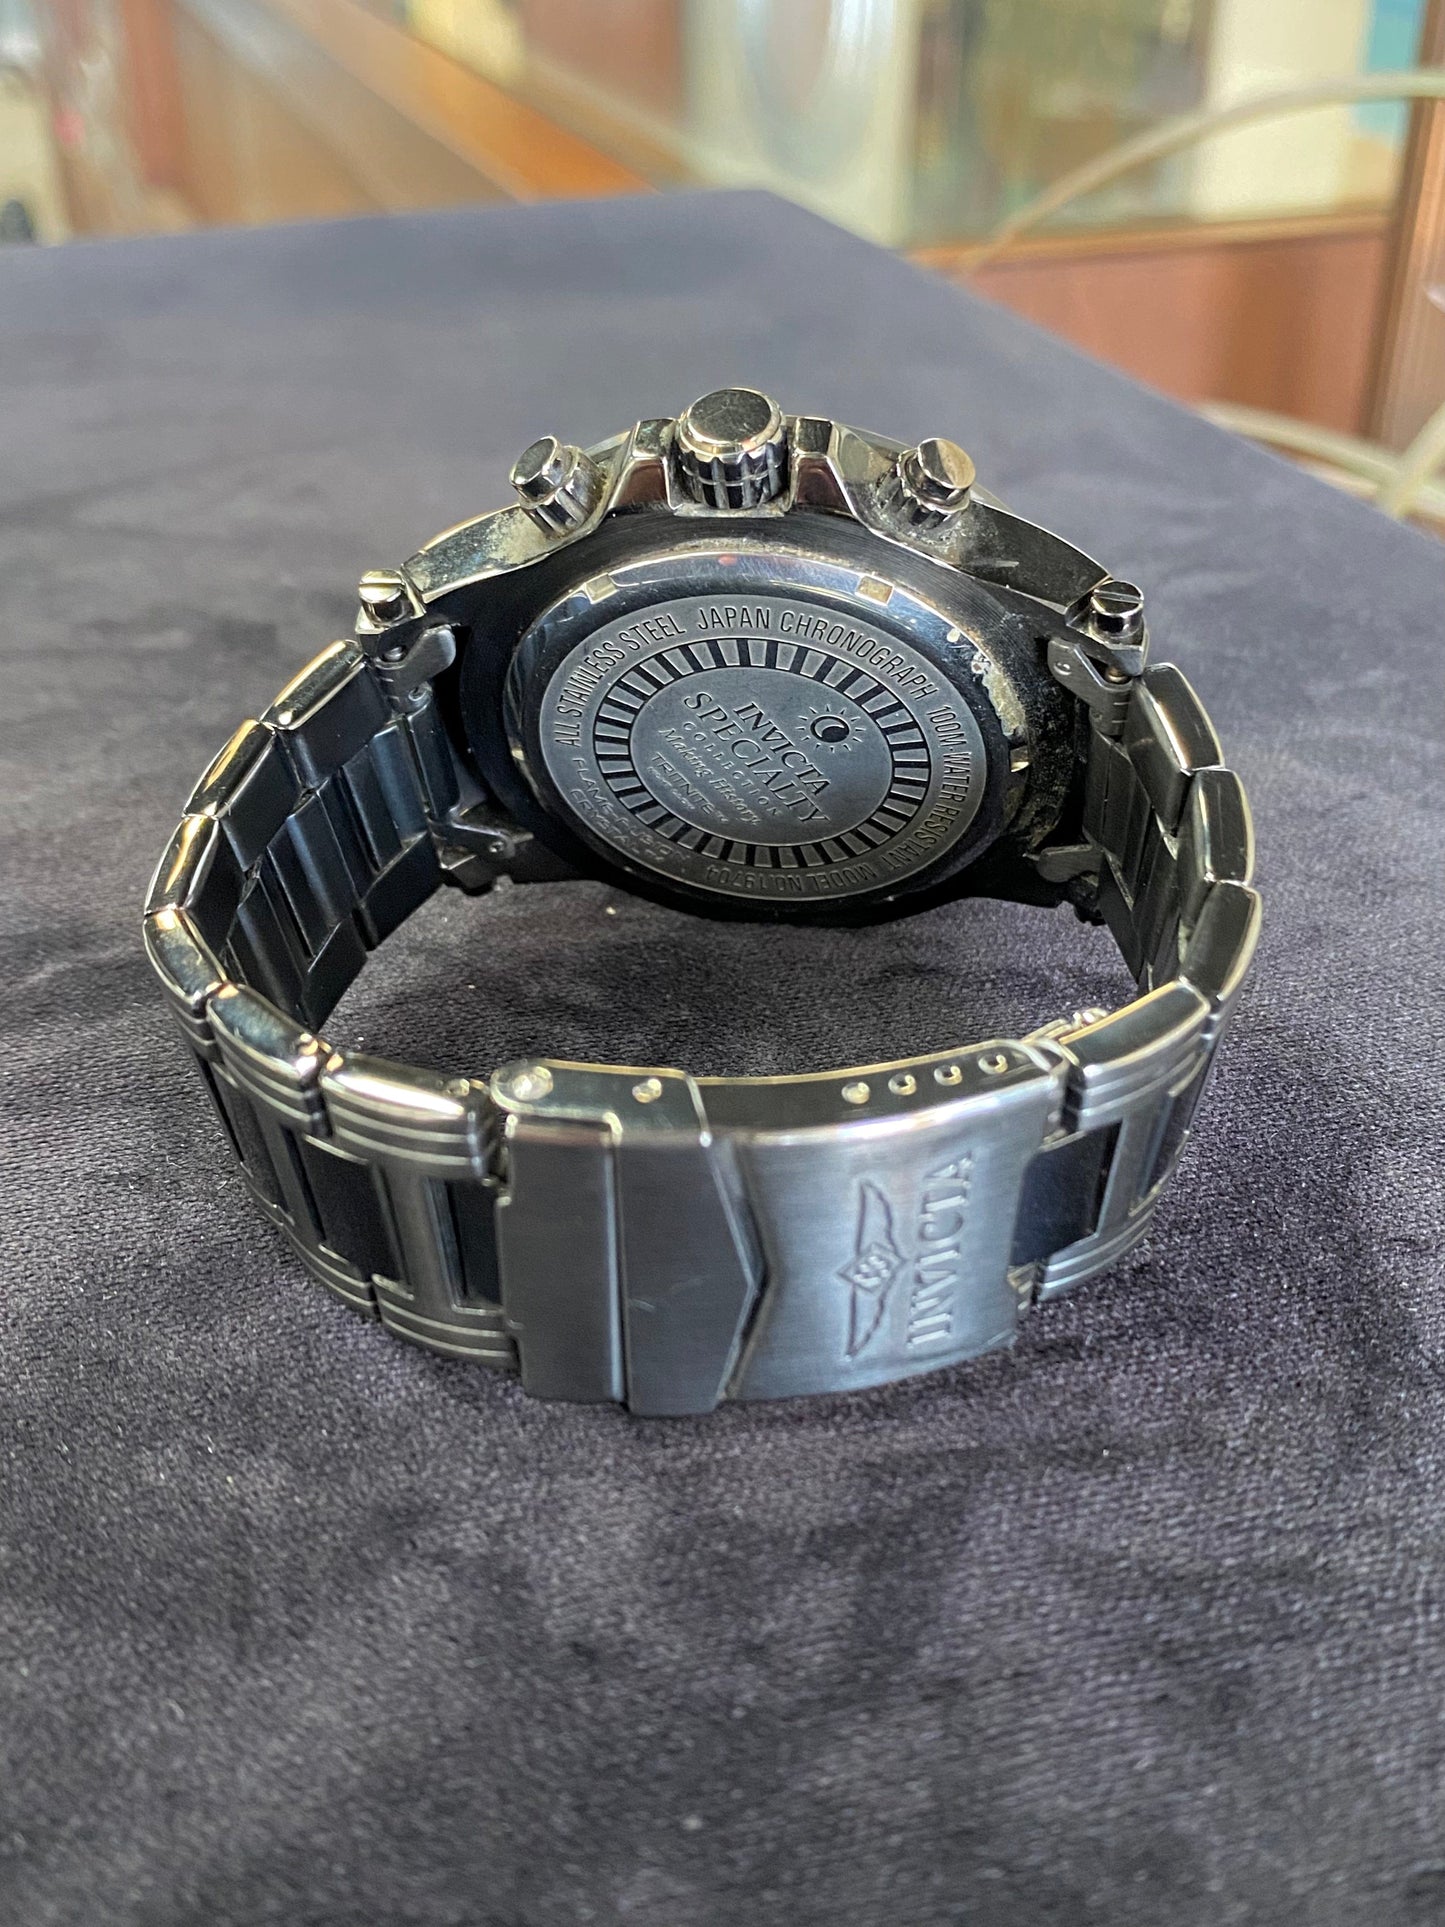 Invicta Specialty Colletion Men's Watch Model 19704